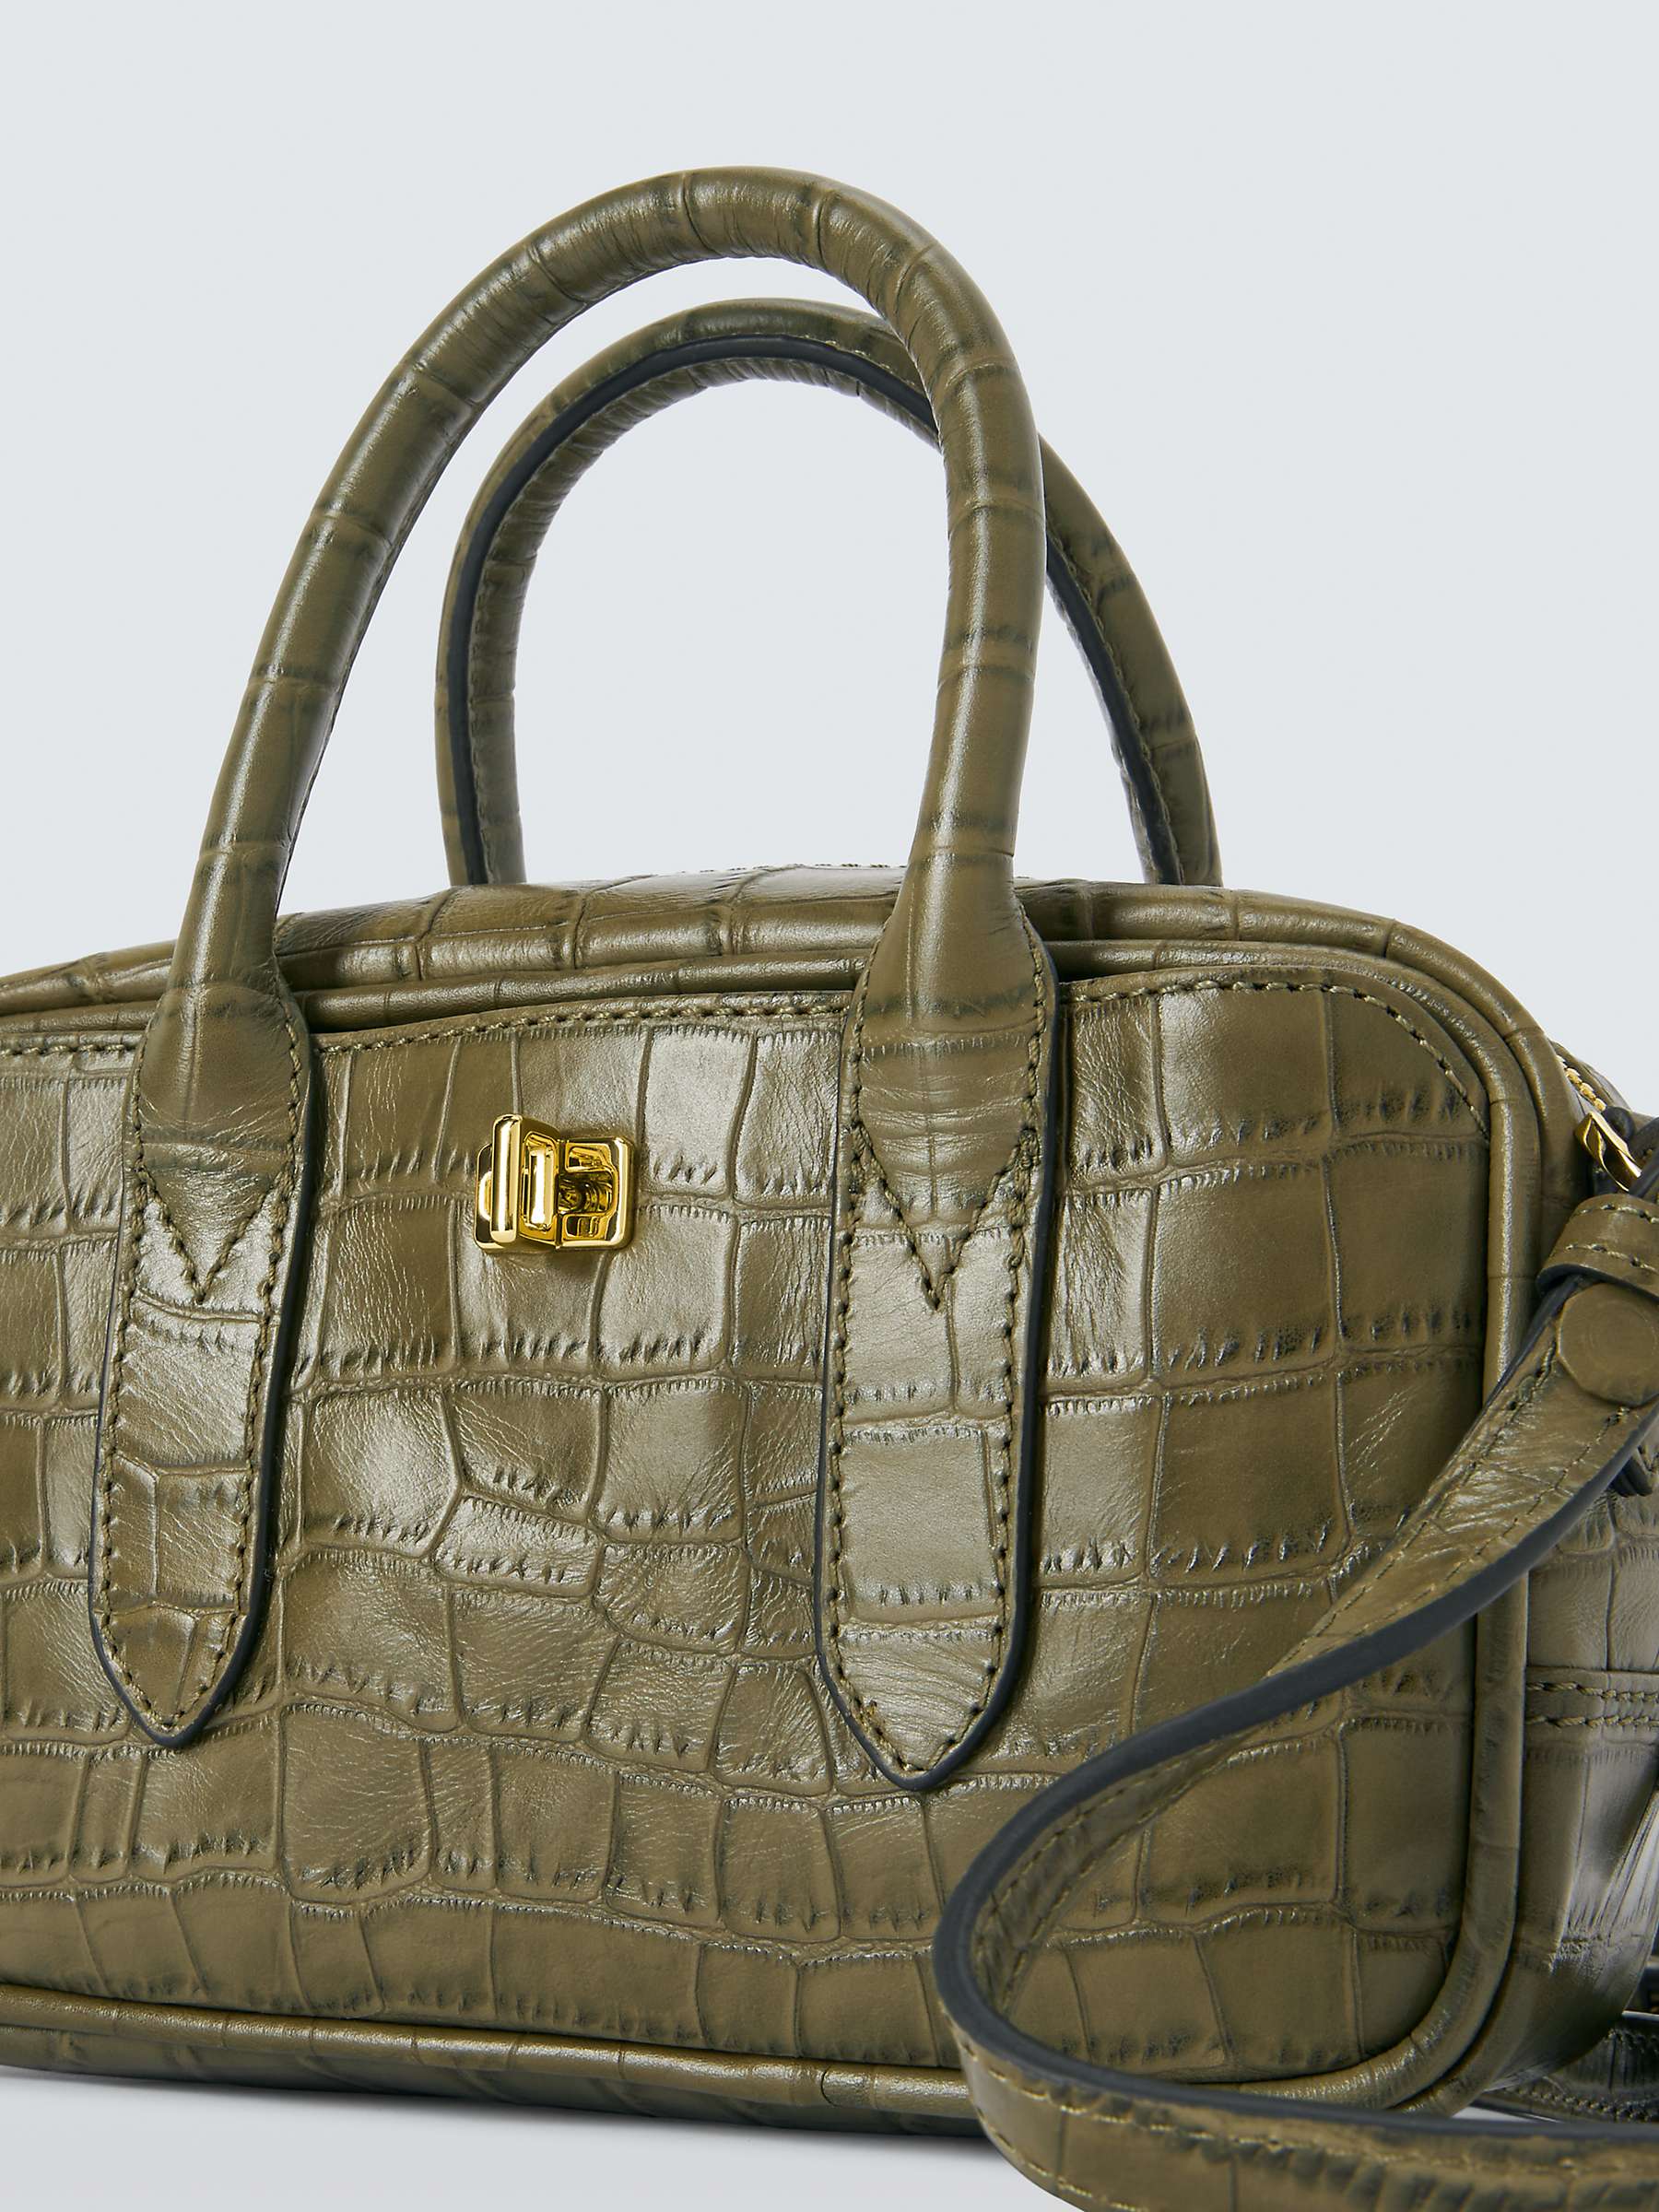 Buy John Lewis Leather Zip Around Grab Bag Online at johnlewis.com